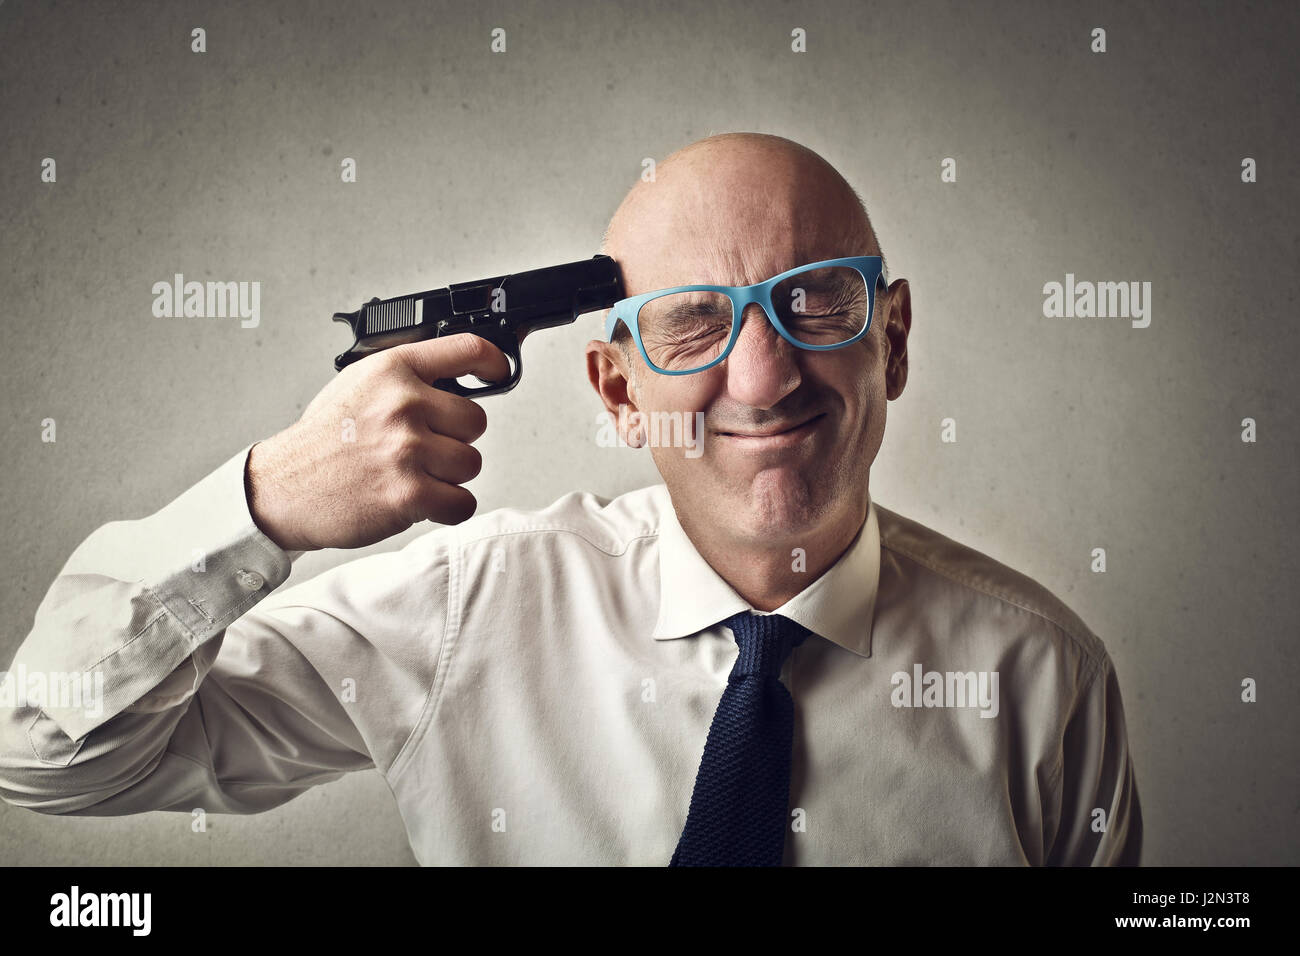 Businessman holding gun to his head Stock Photo